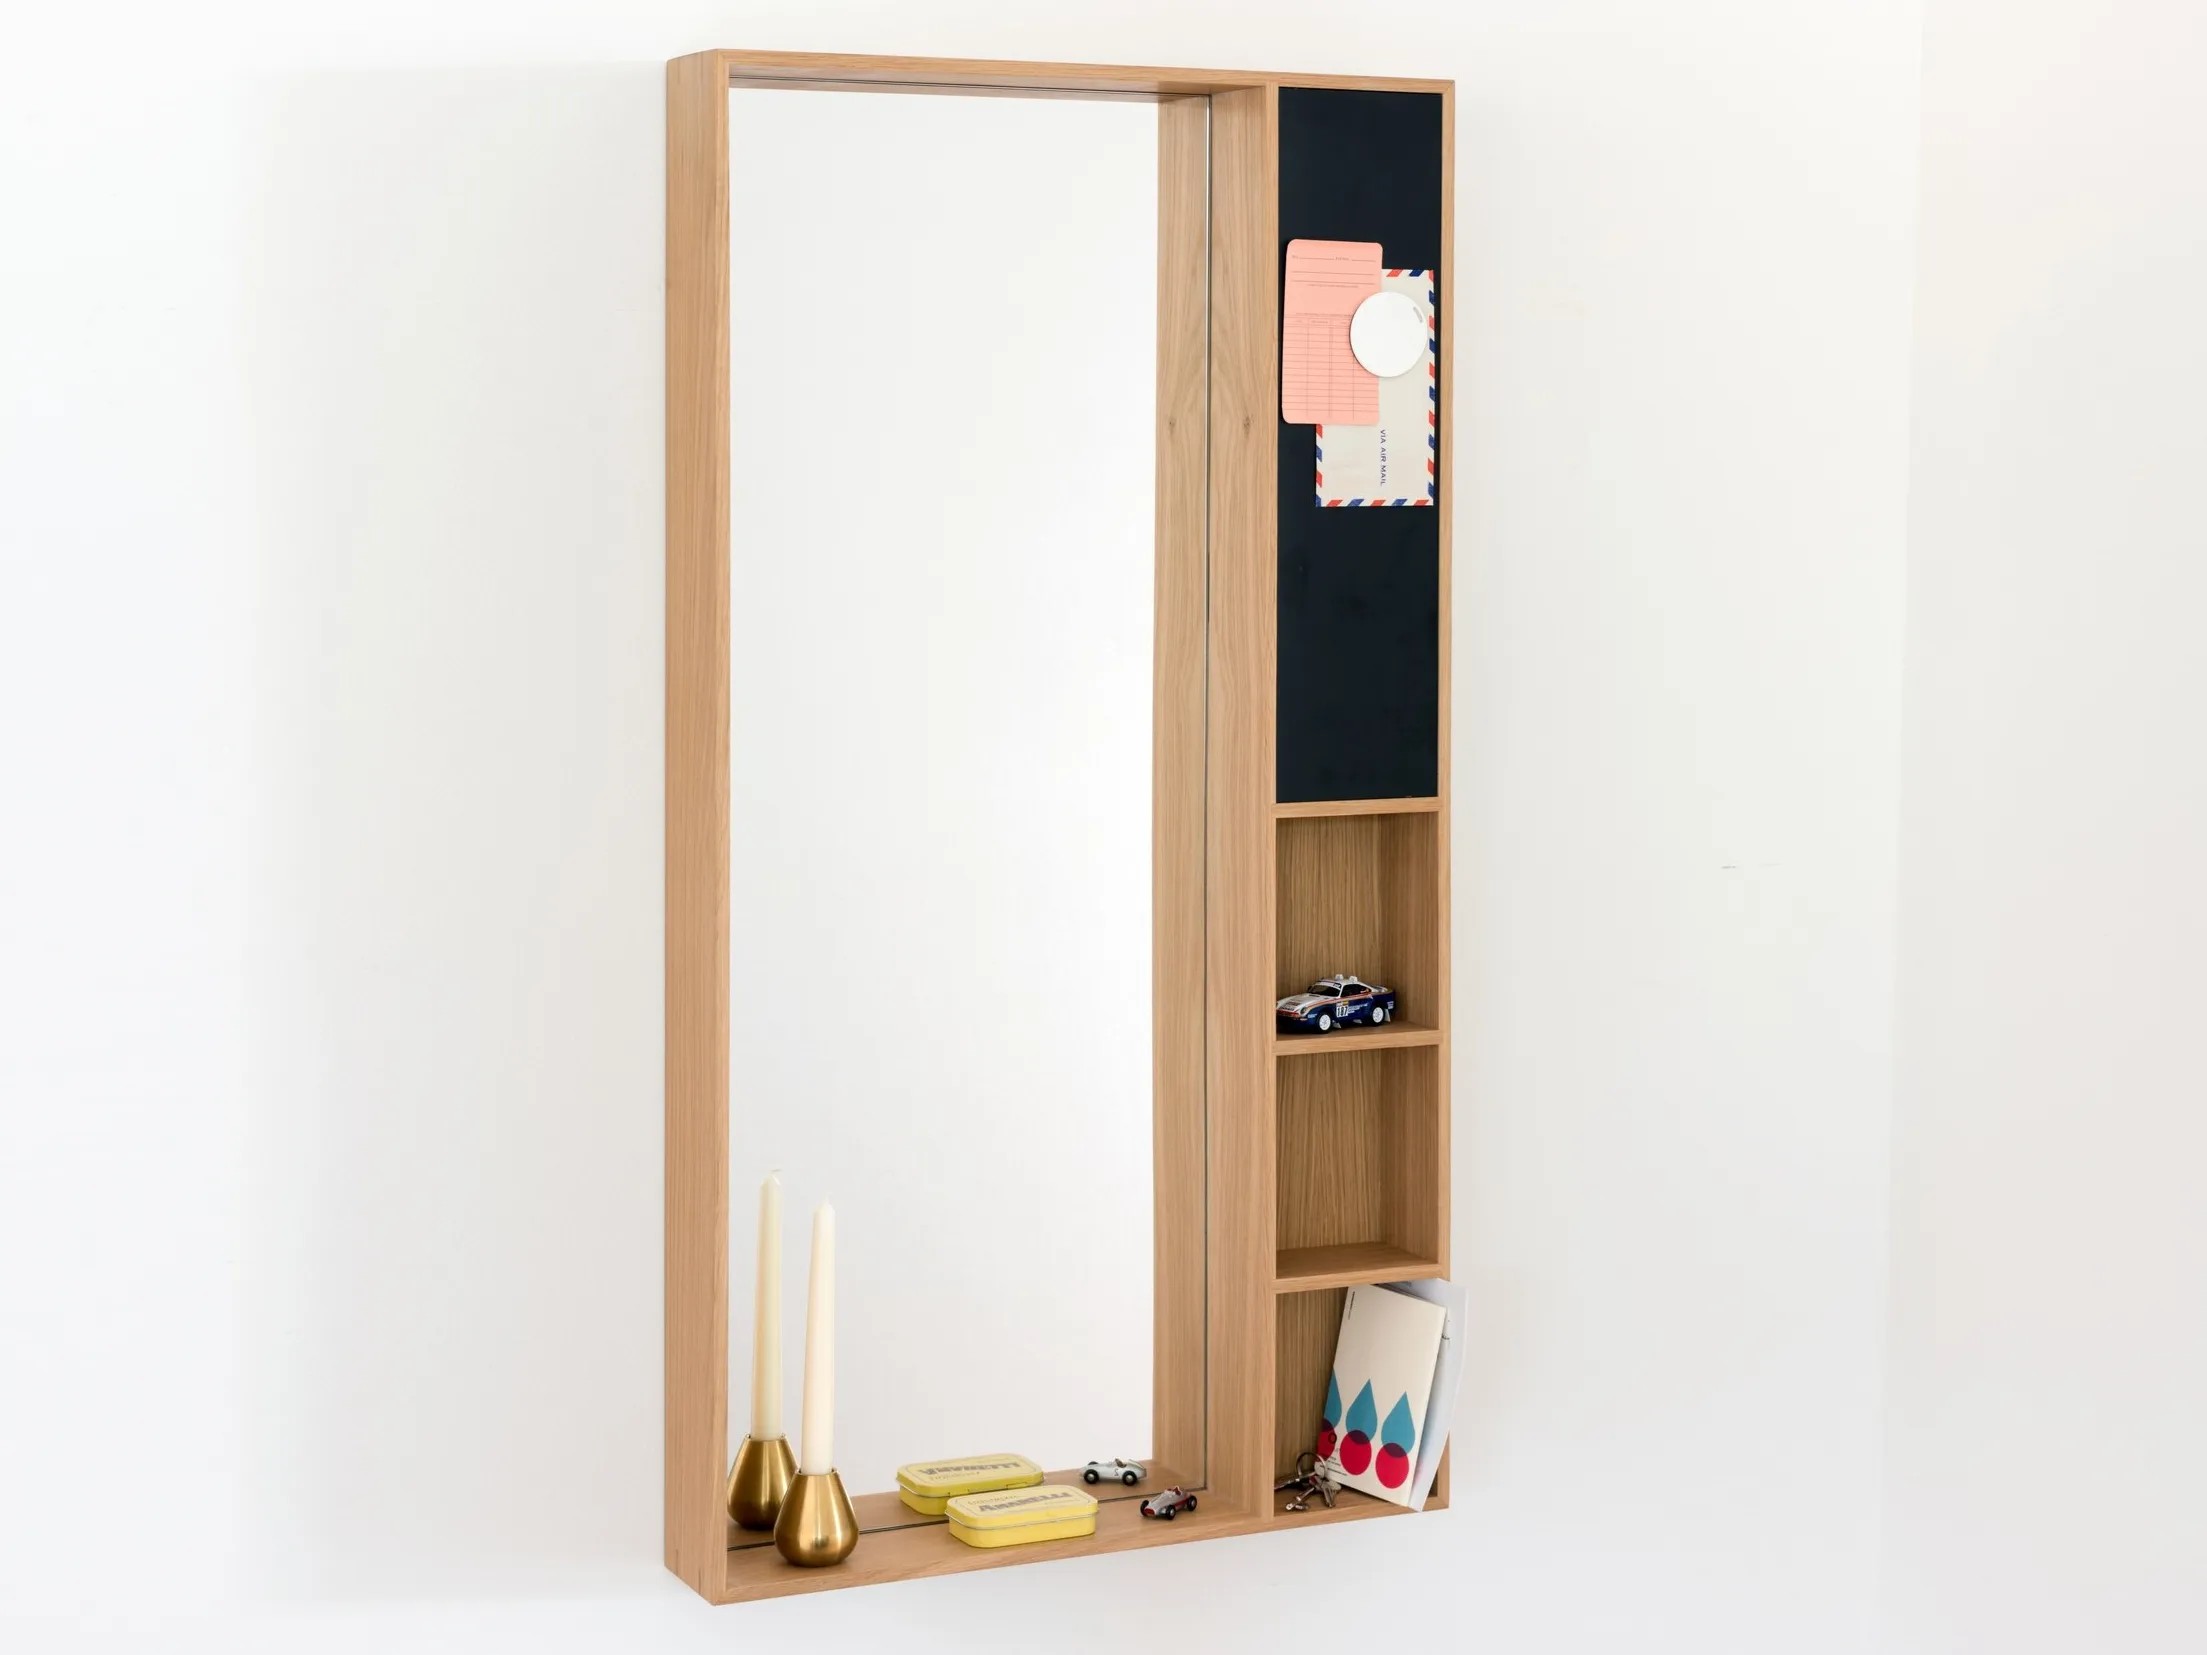 Rectangular wall-mounted oak mirror with shelf